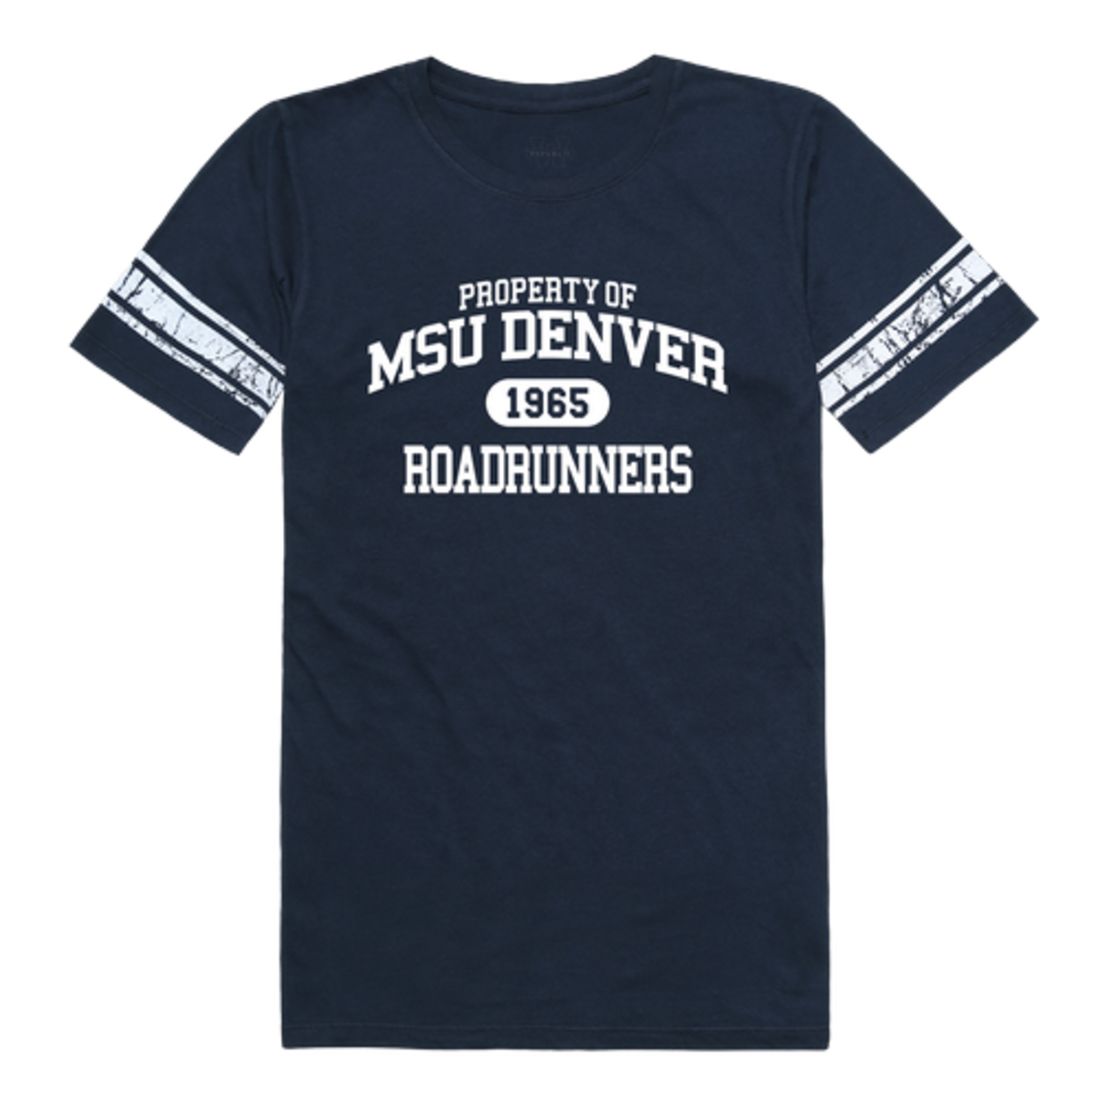 Metropolitan State University of Denver Roadrunners Womens Property Football T-Shirt Tee